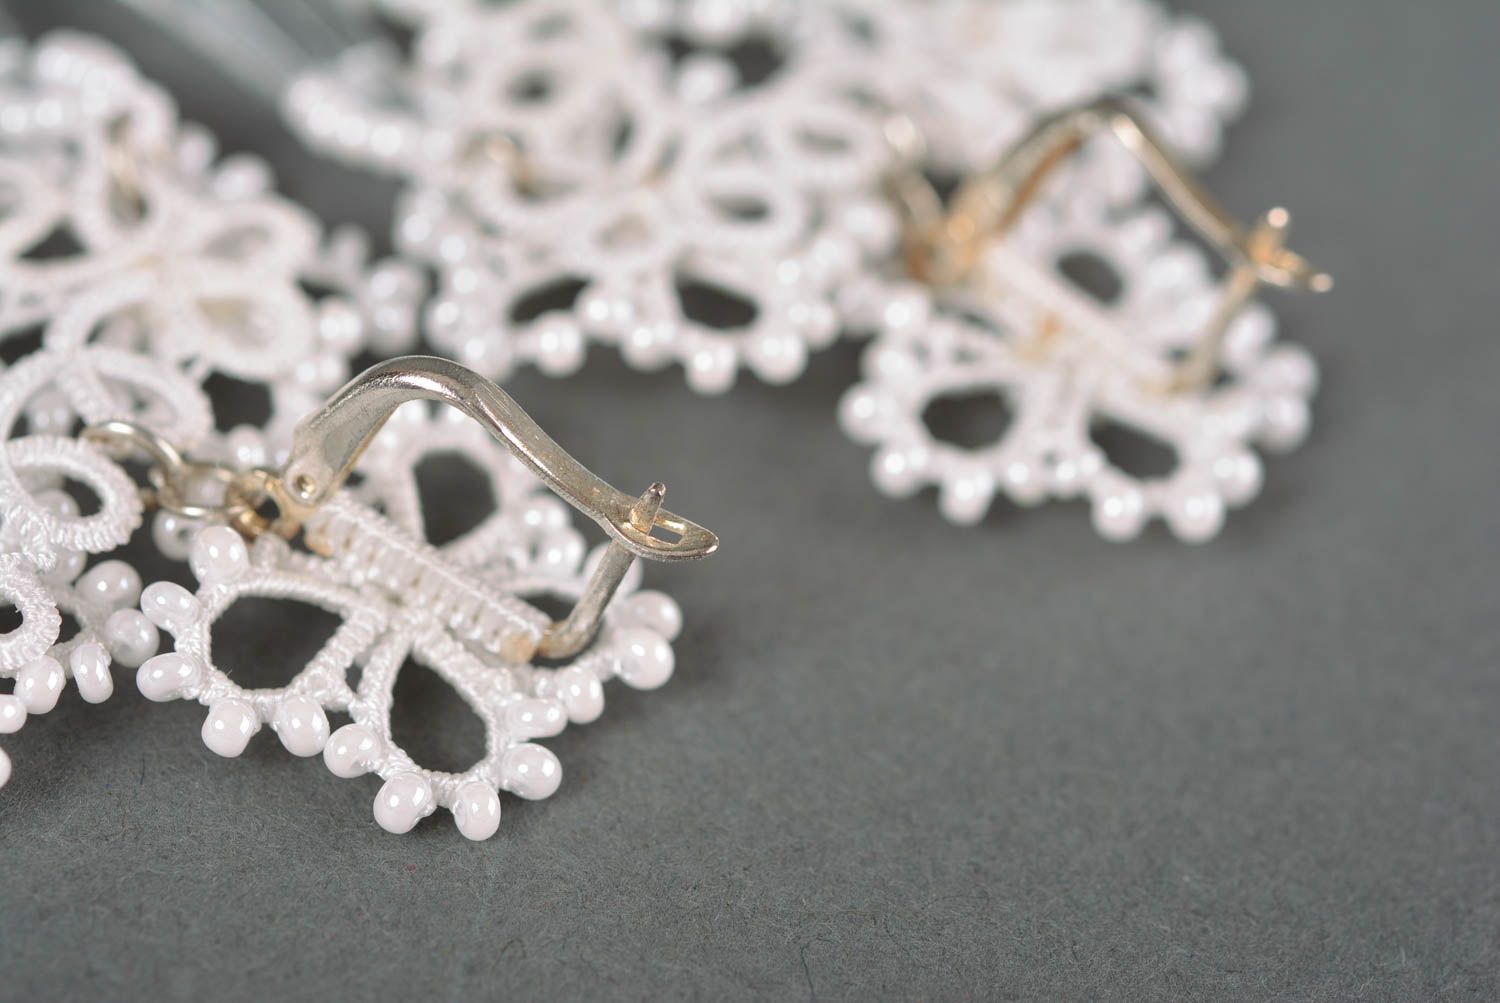 Dangling earrings handmade jewellery designer accessories tatting lace gift idea photo 5